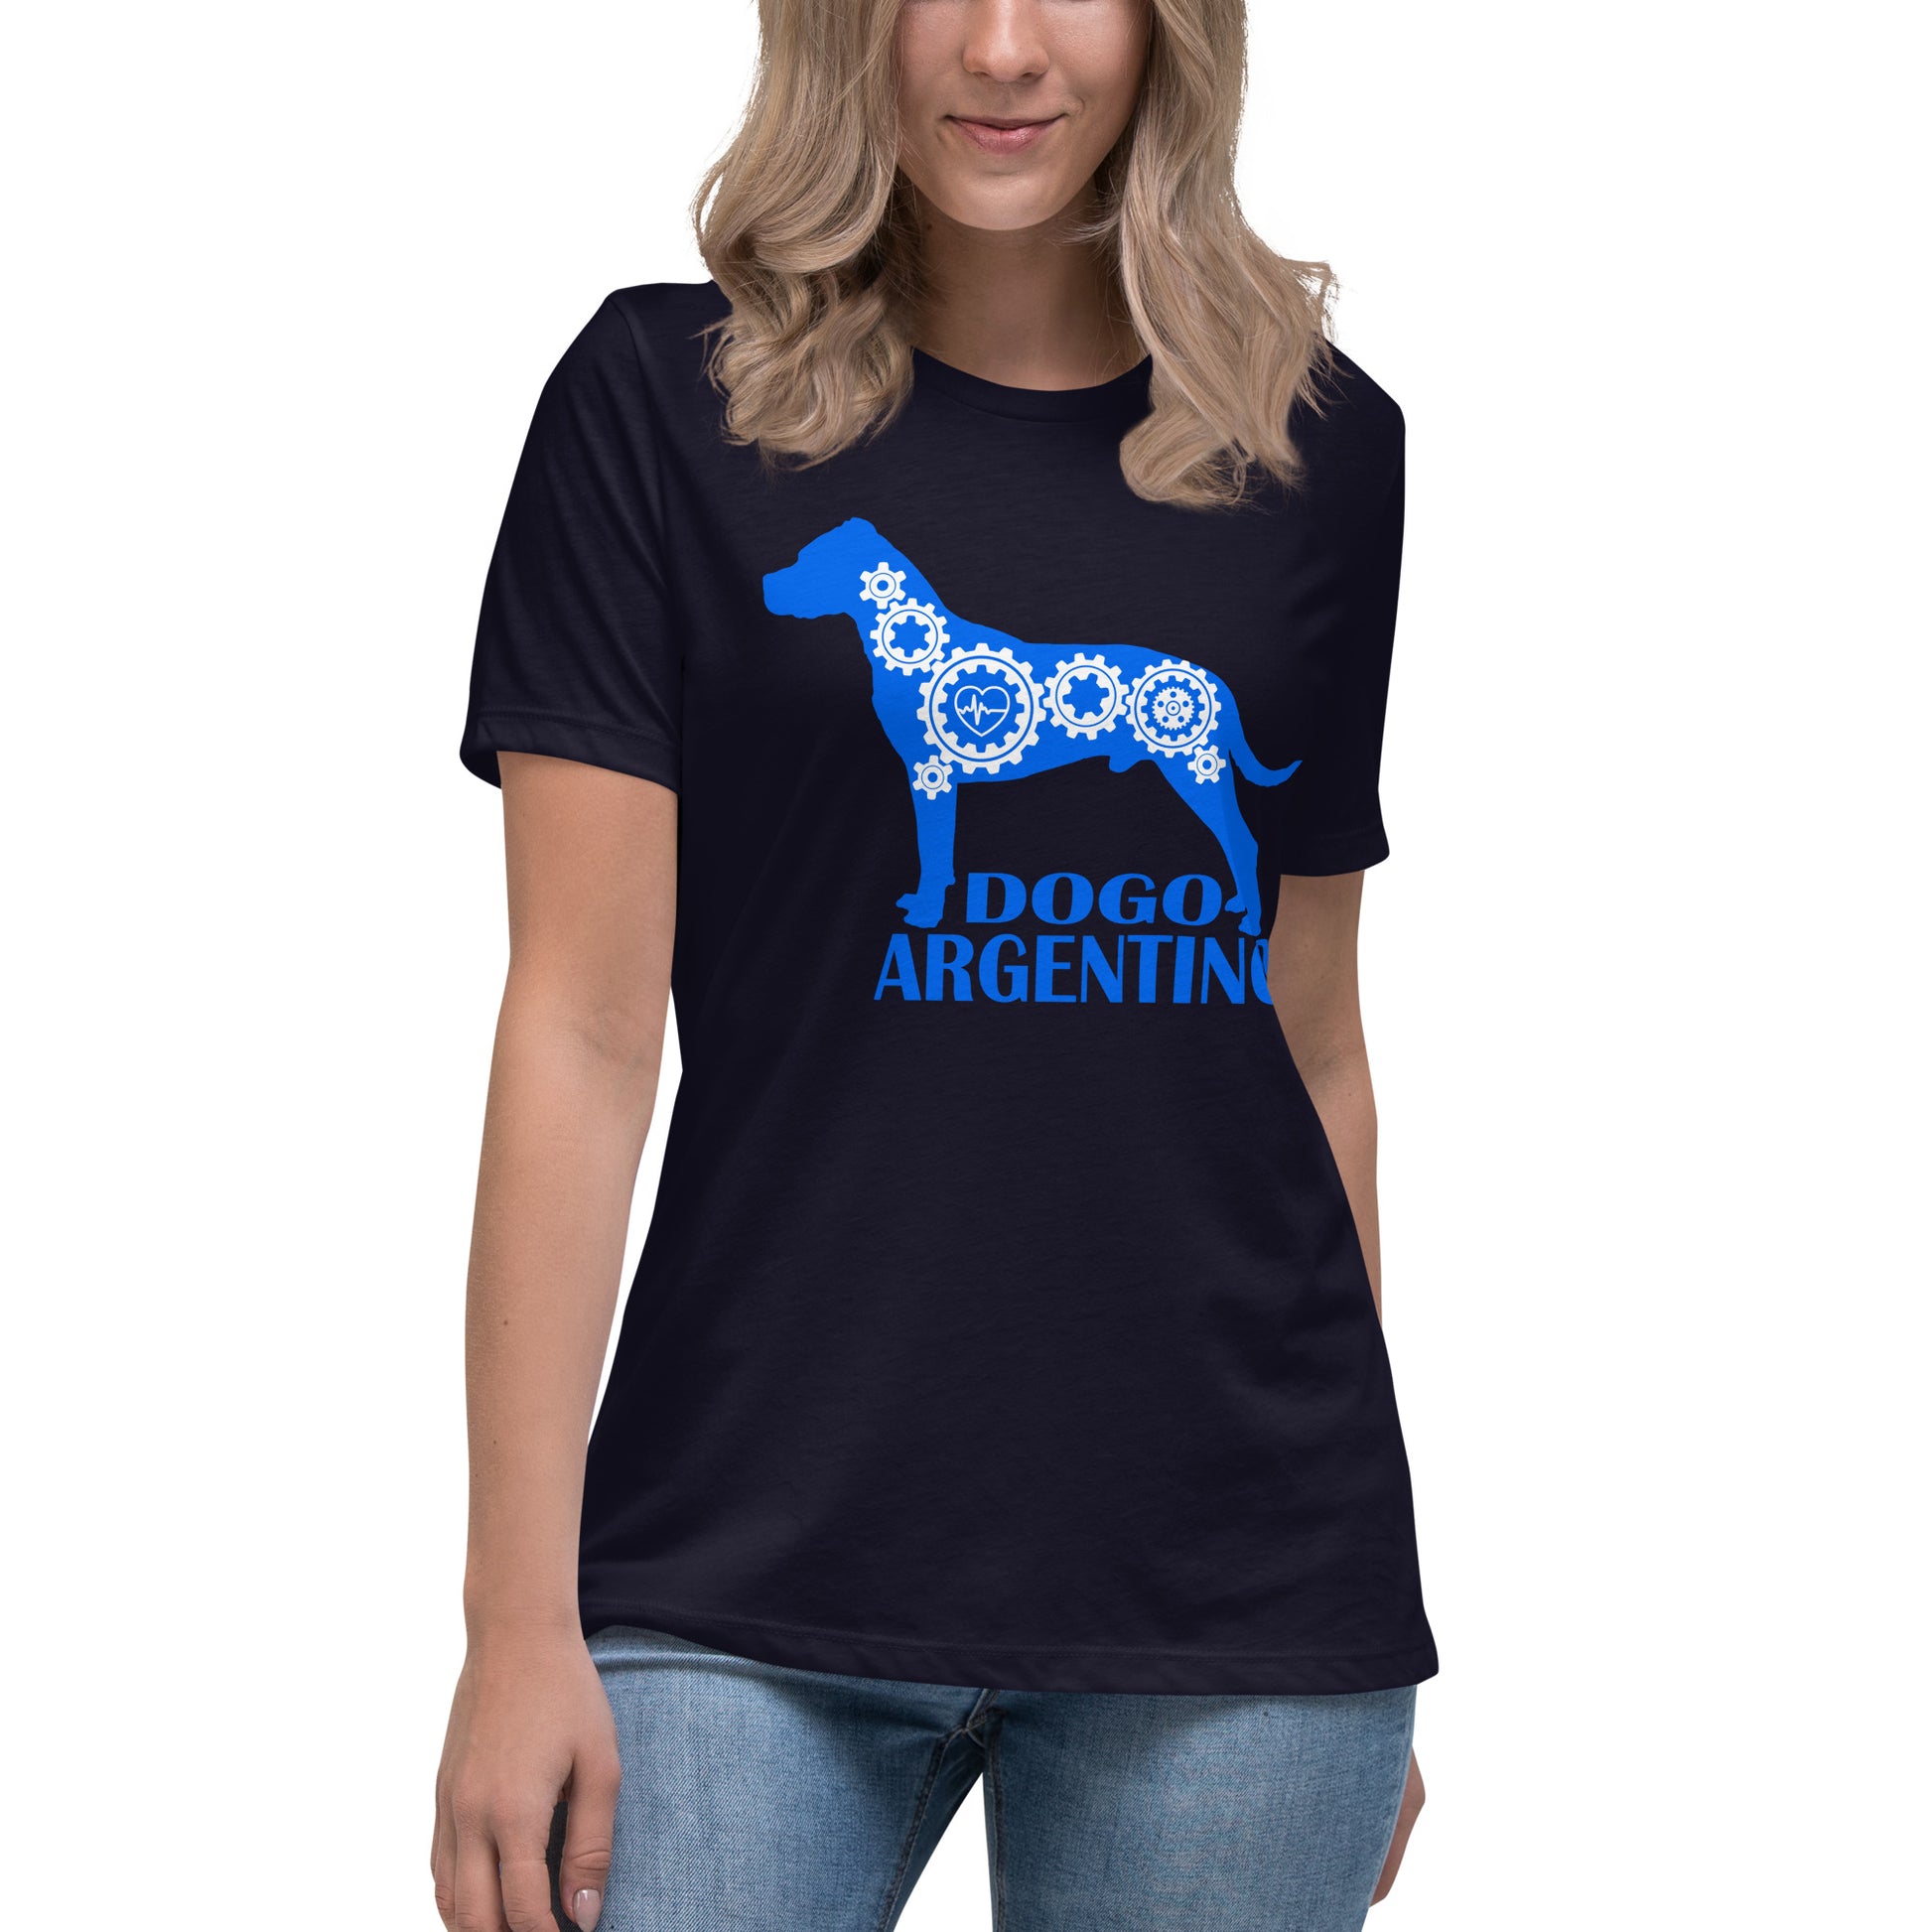 Dogo Argentino Bionic women’s navy t-shirt by Dog Artistry.